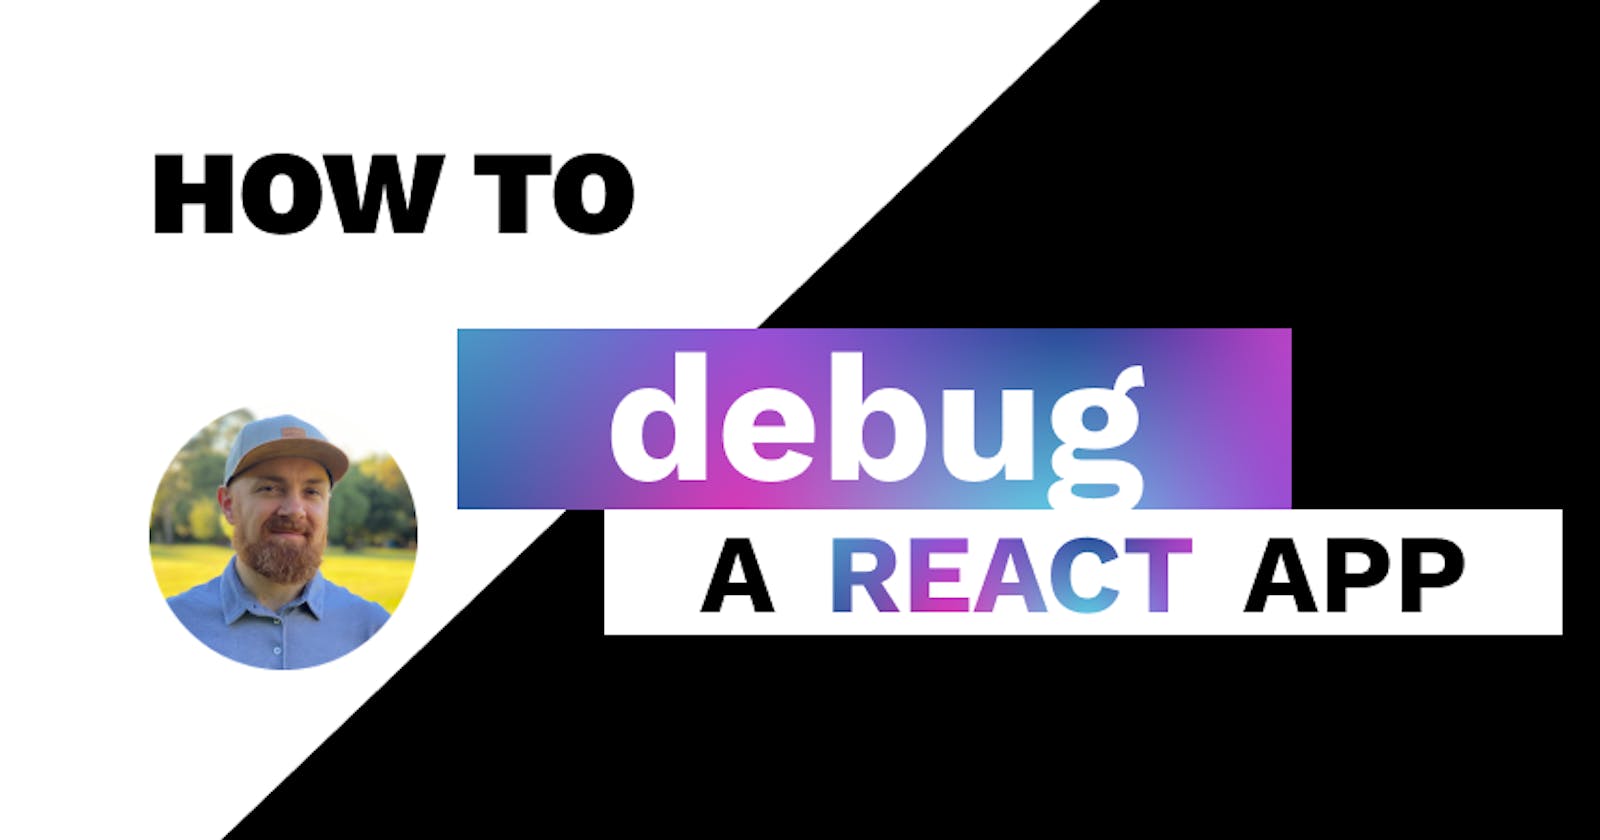 How to debug a React app